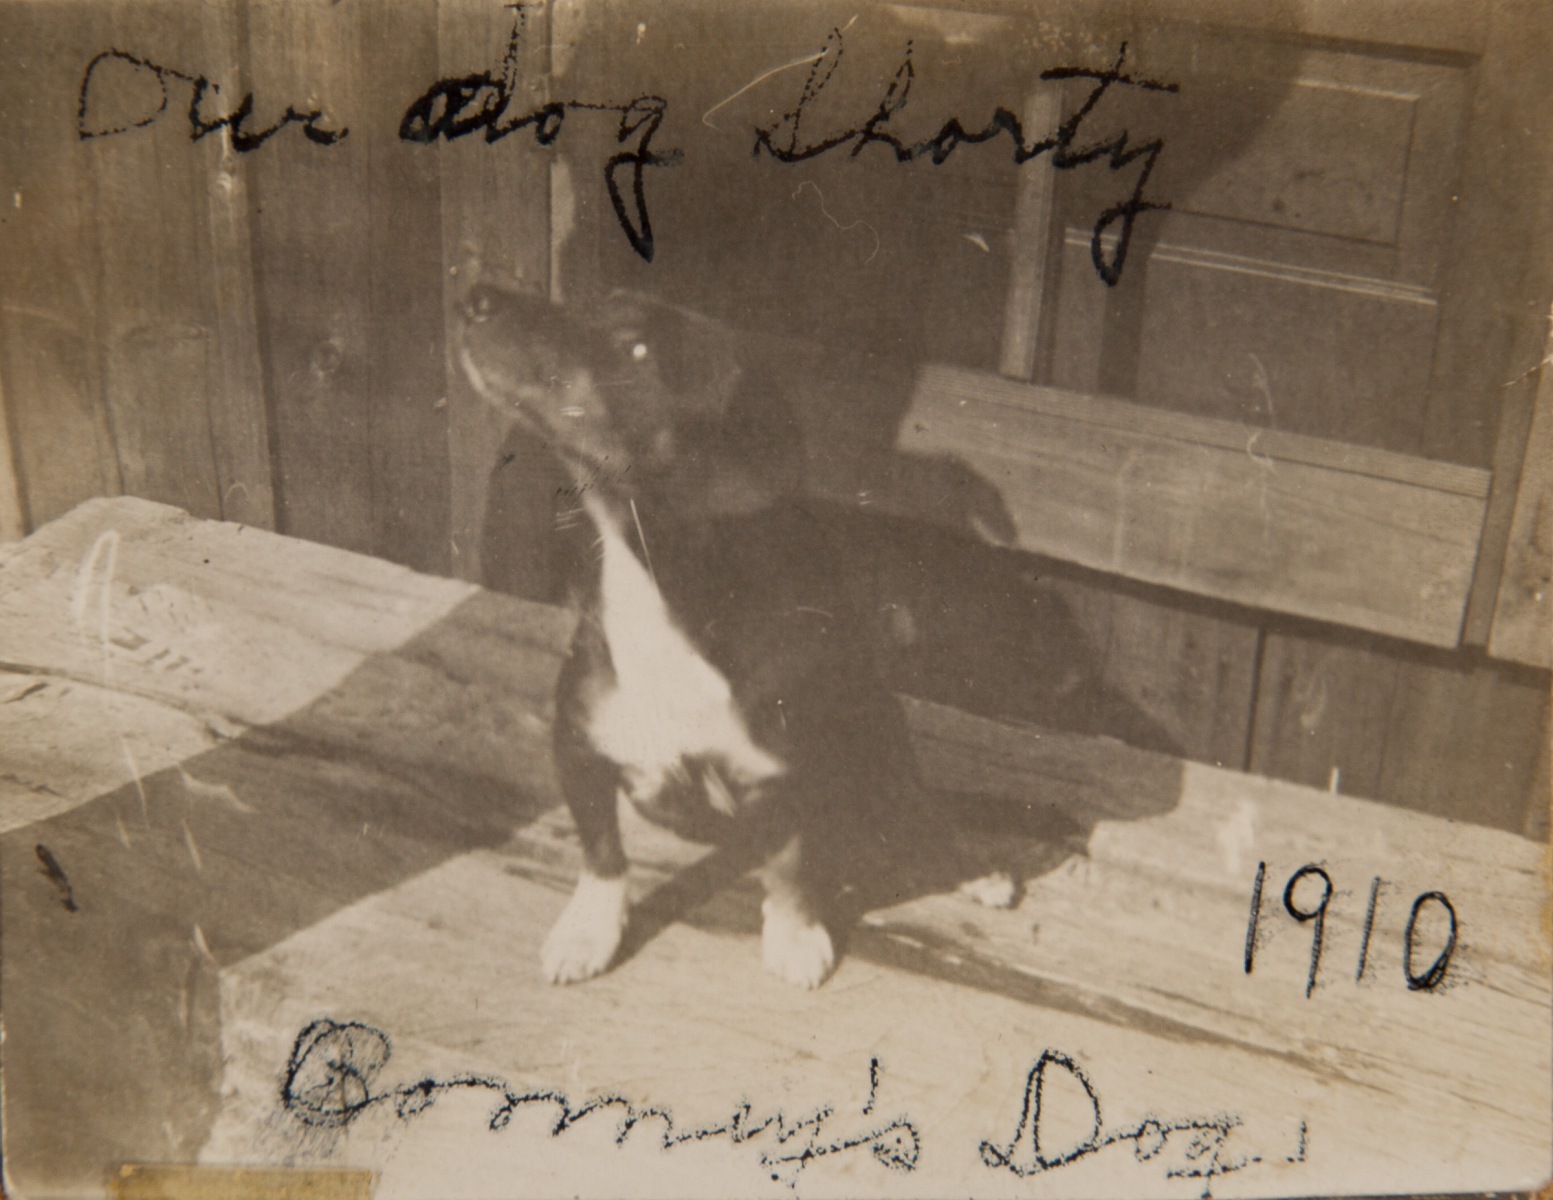 1910 " Bonney's Dog, Our dog Shorty"